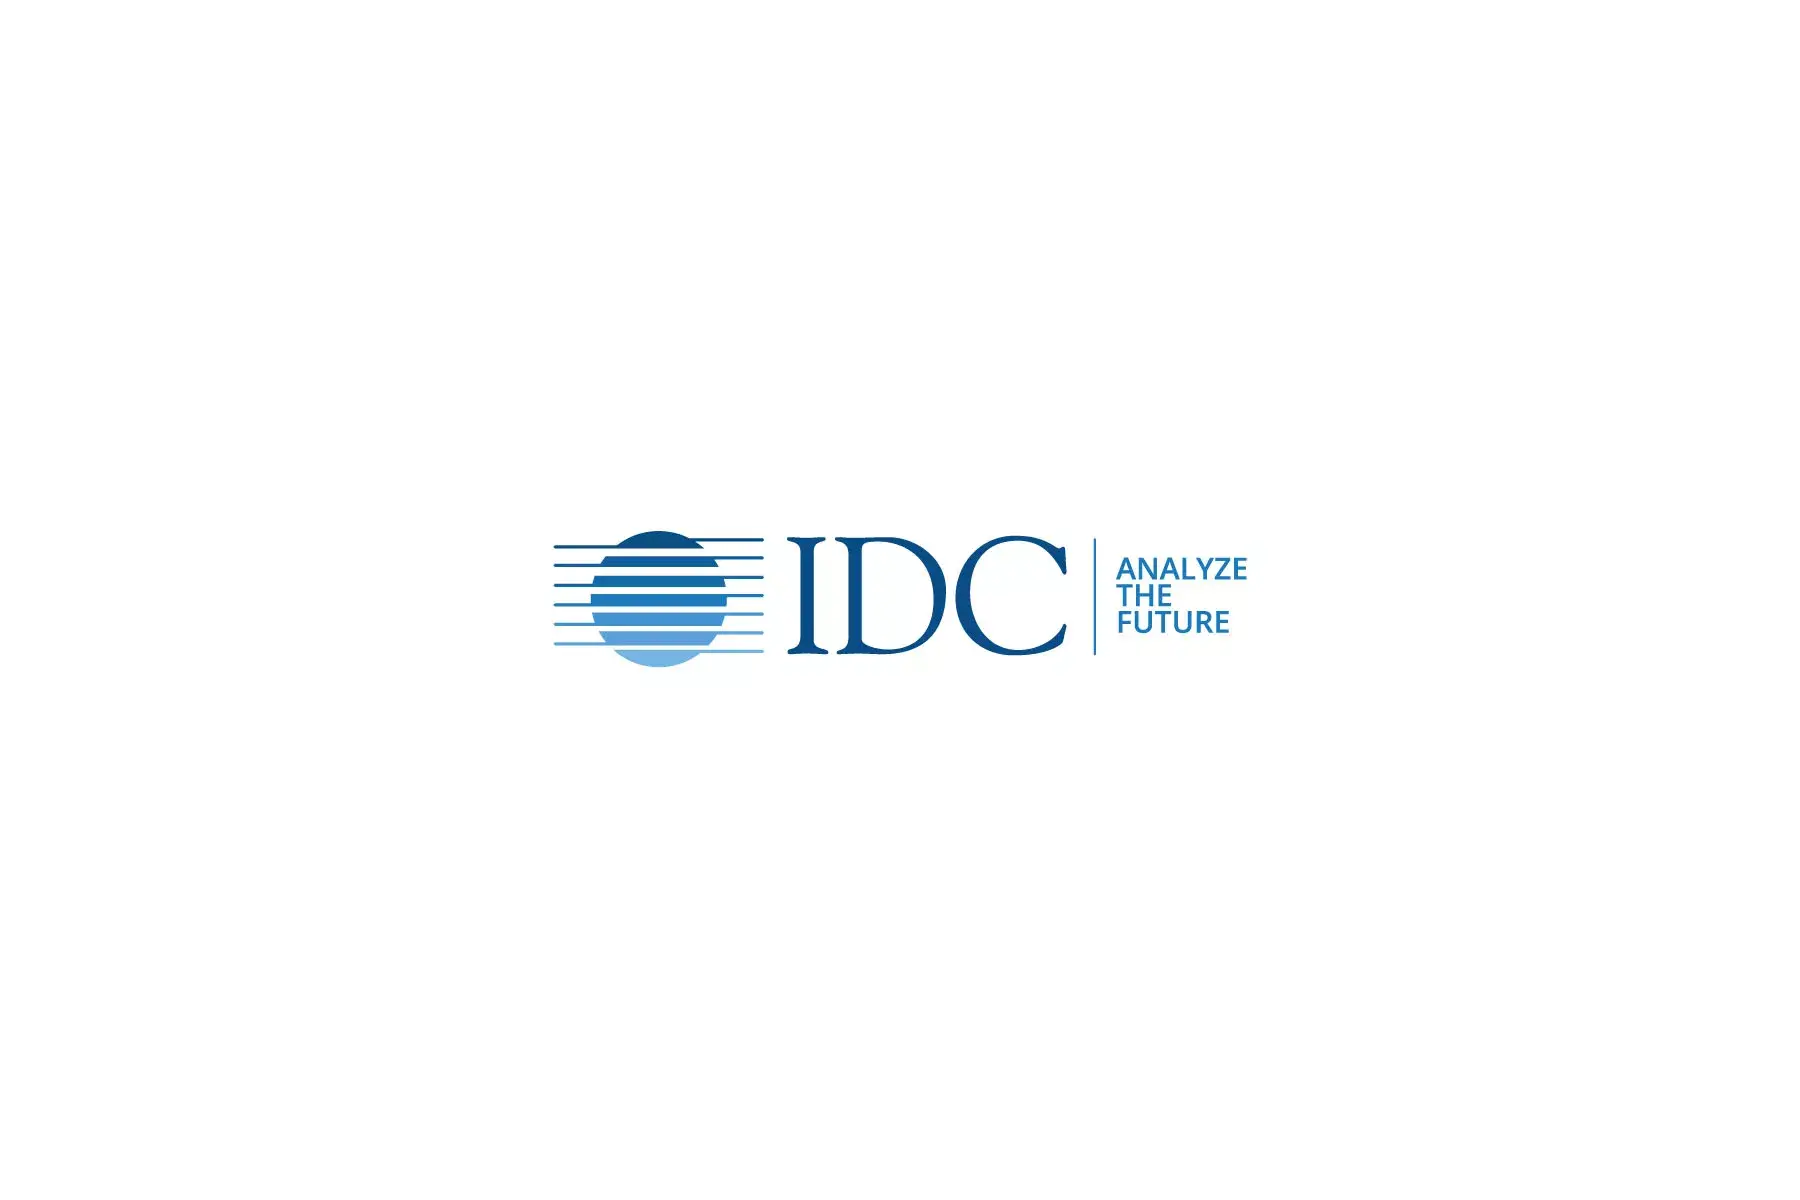 [Resources] IDC collaborative workflow management banner image